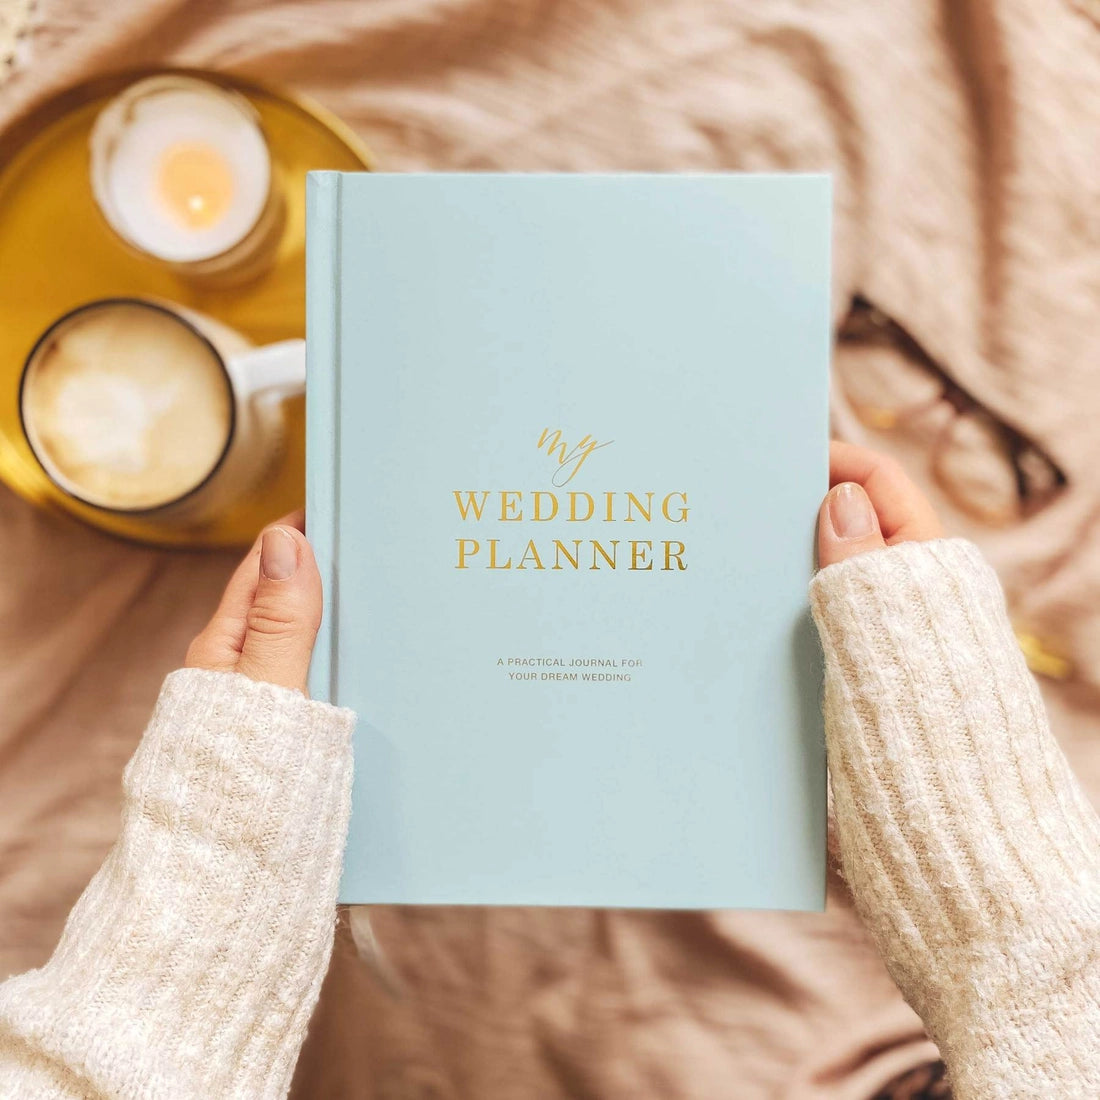 Wedding planner journal gift